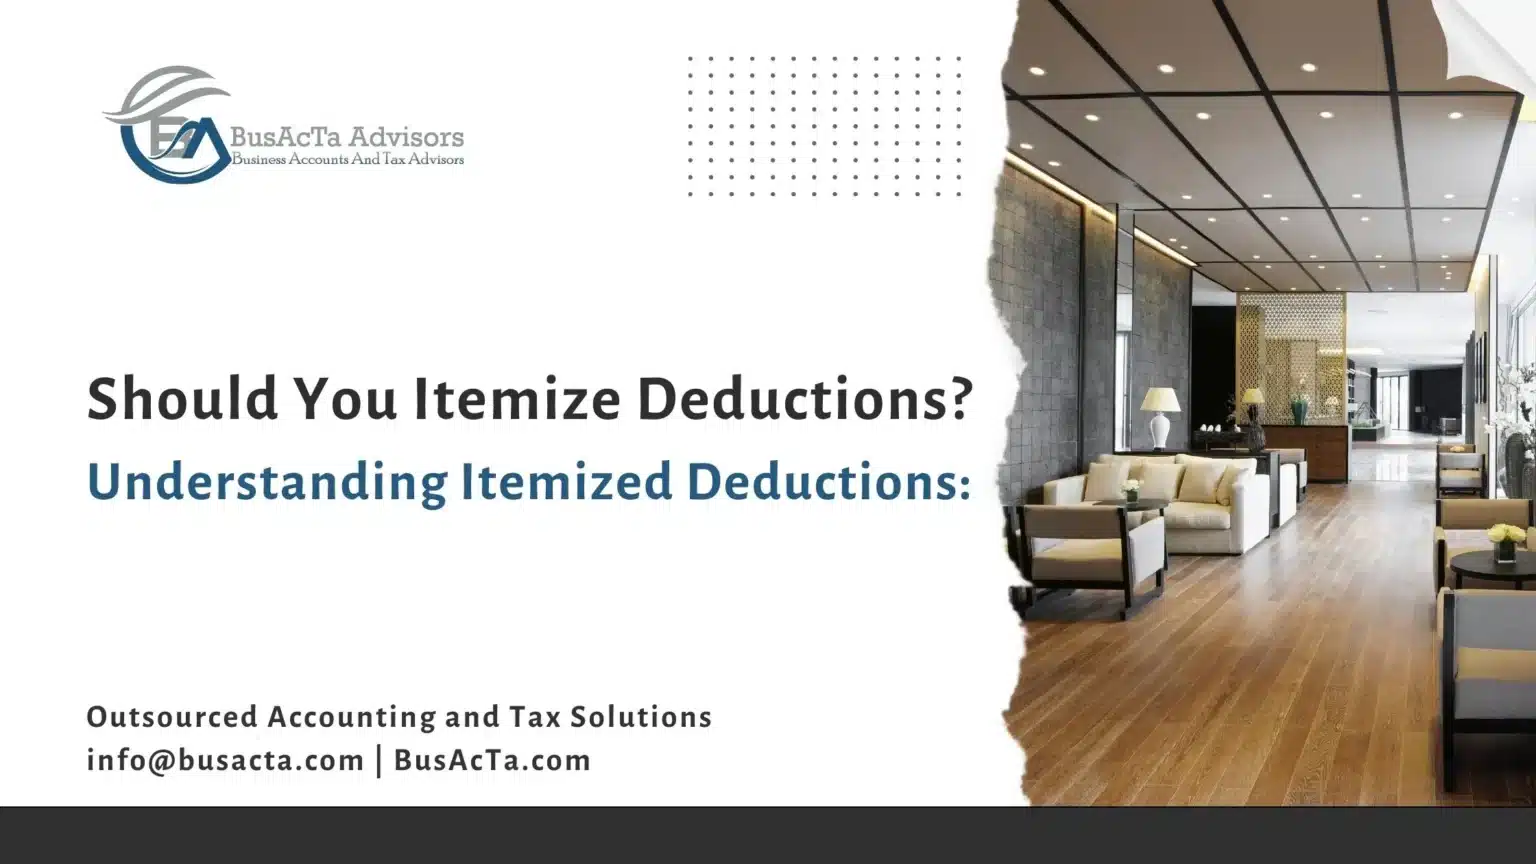 Itemized Deductions